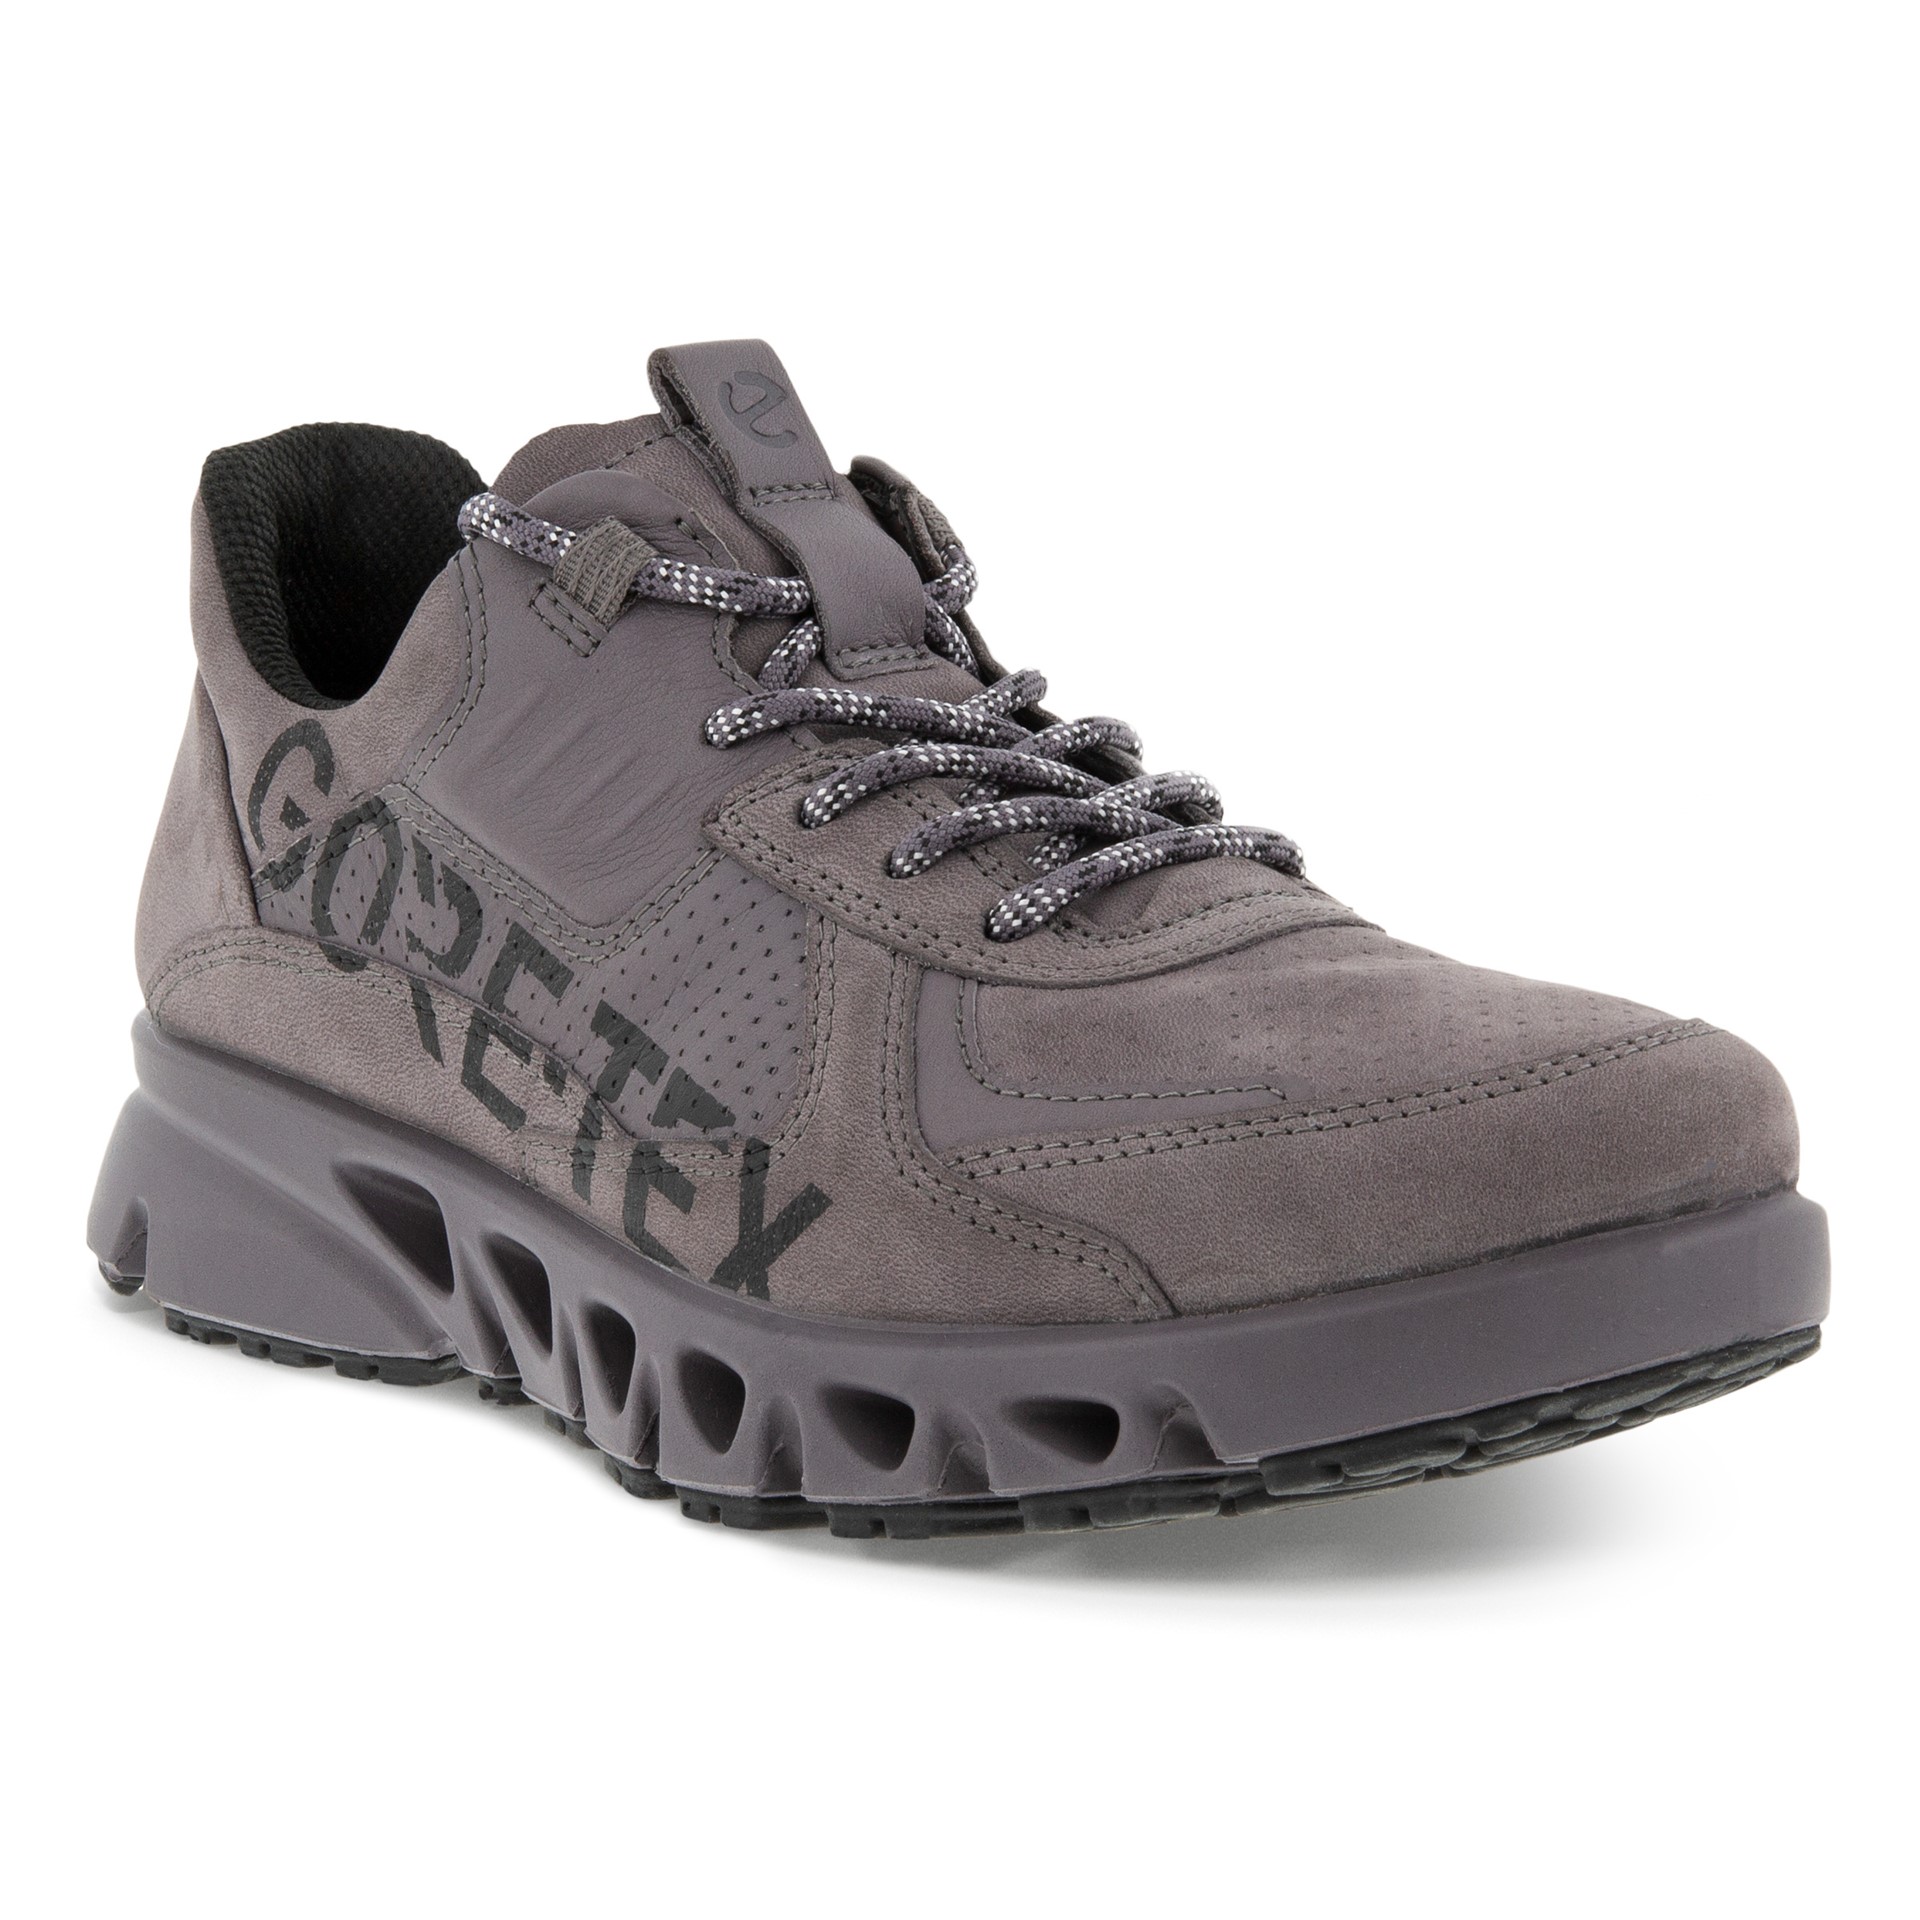 Ecco Multi-Vent 88025302589 Gravity. Fed brun sneaker med goretex, super funktionel outdoor sko. - Nyegaardsko.dk